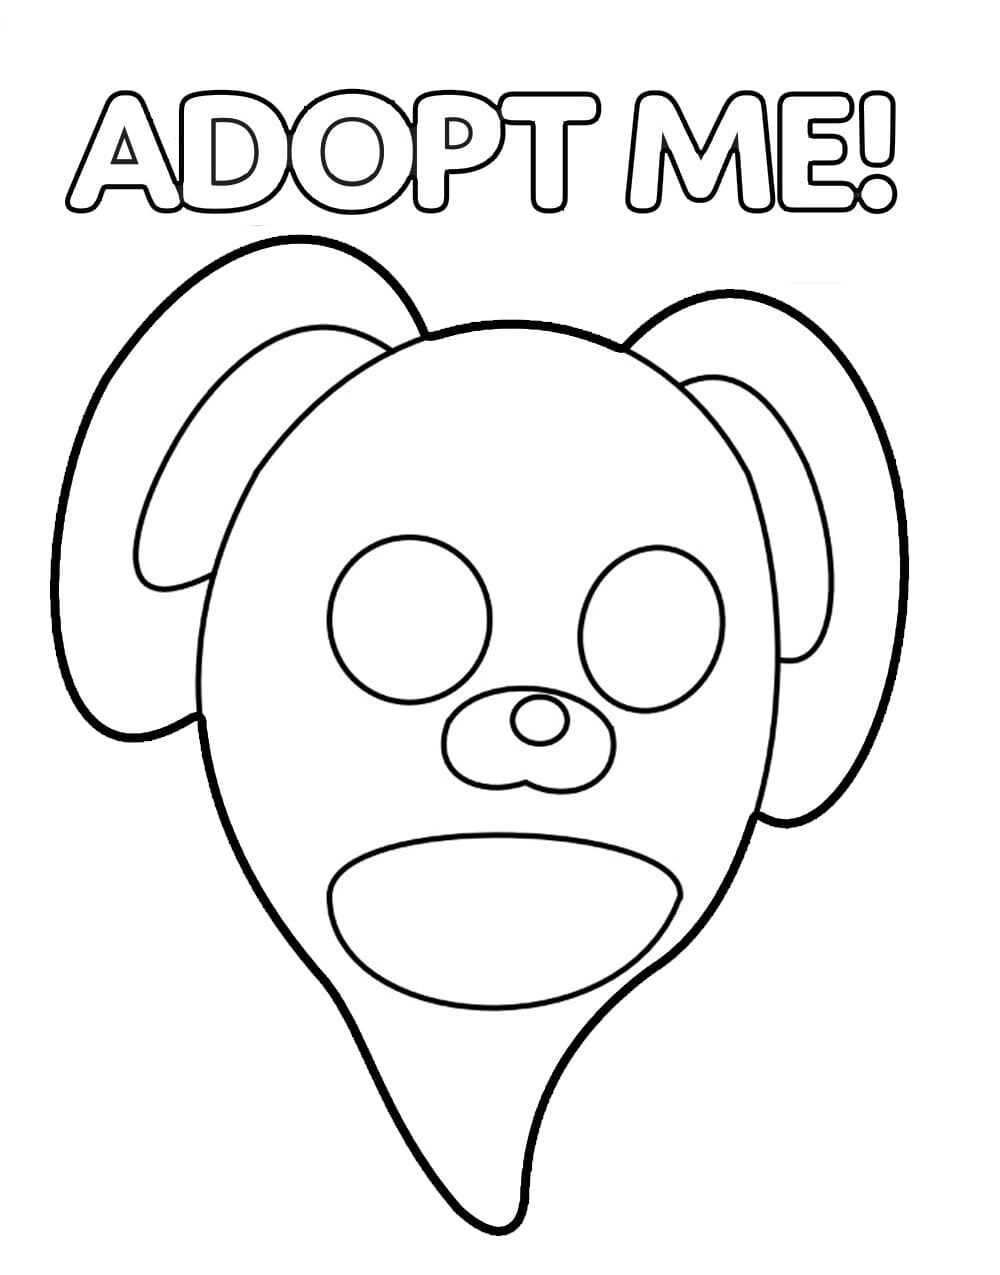 رئيس Ghost Bunny في ألعاب Adopt me من Adopt me